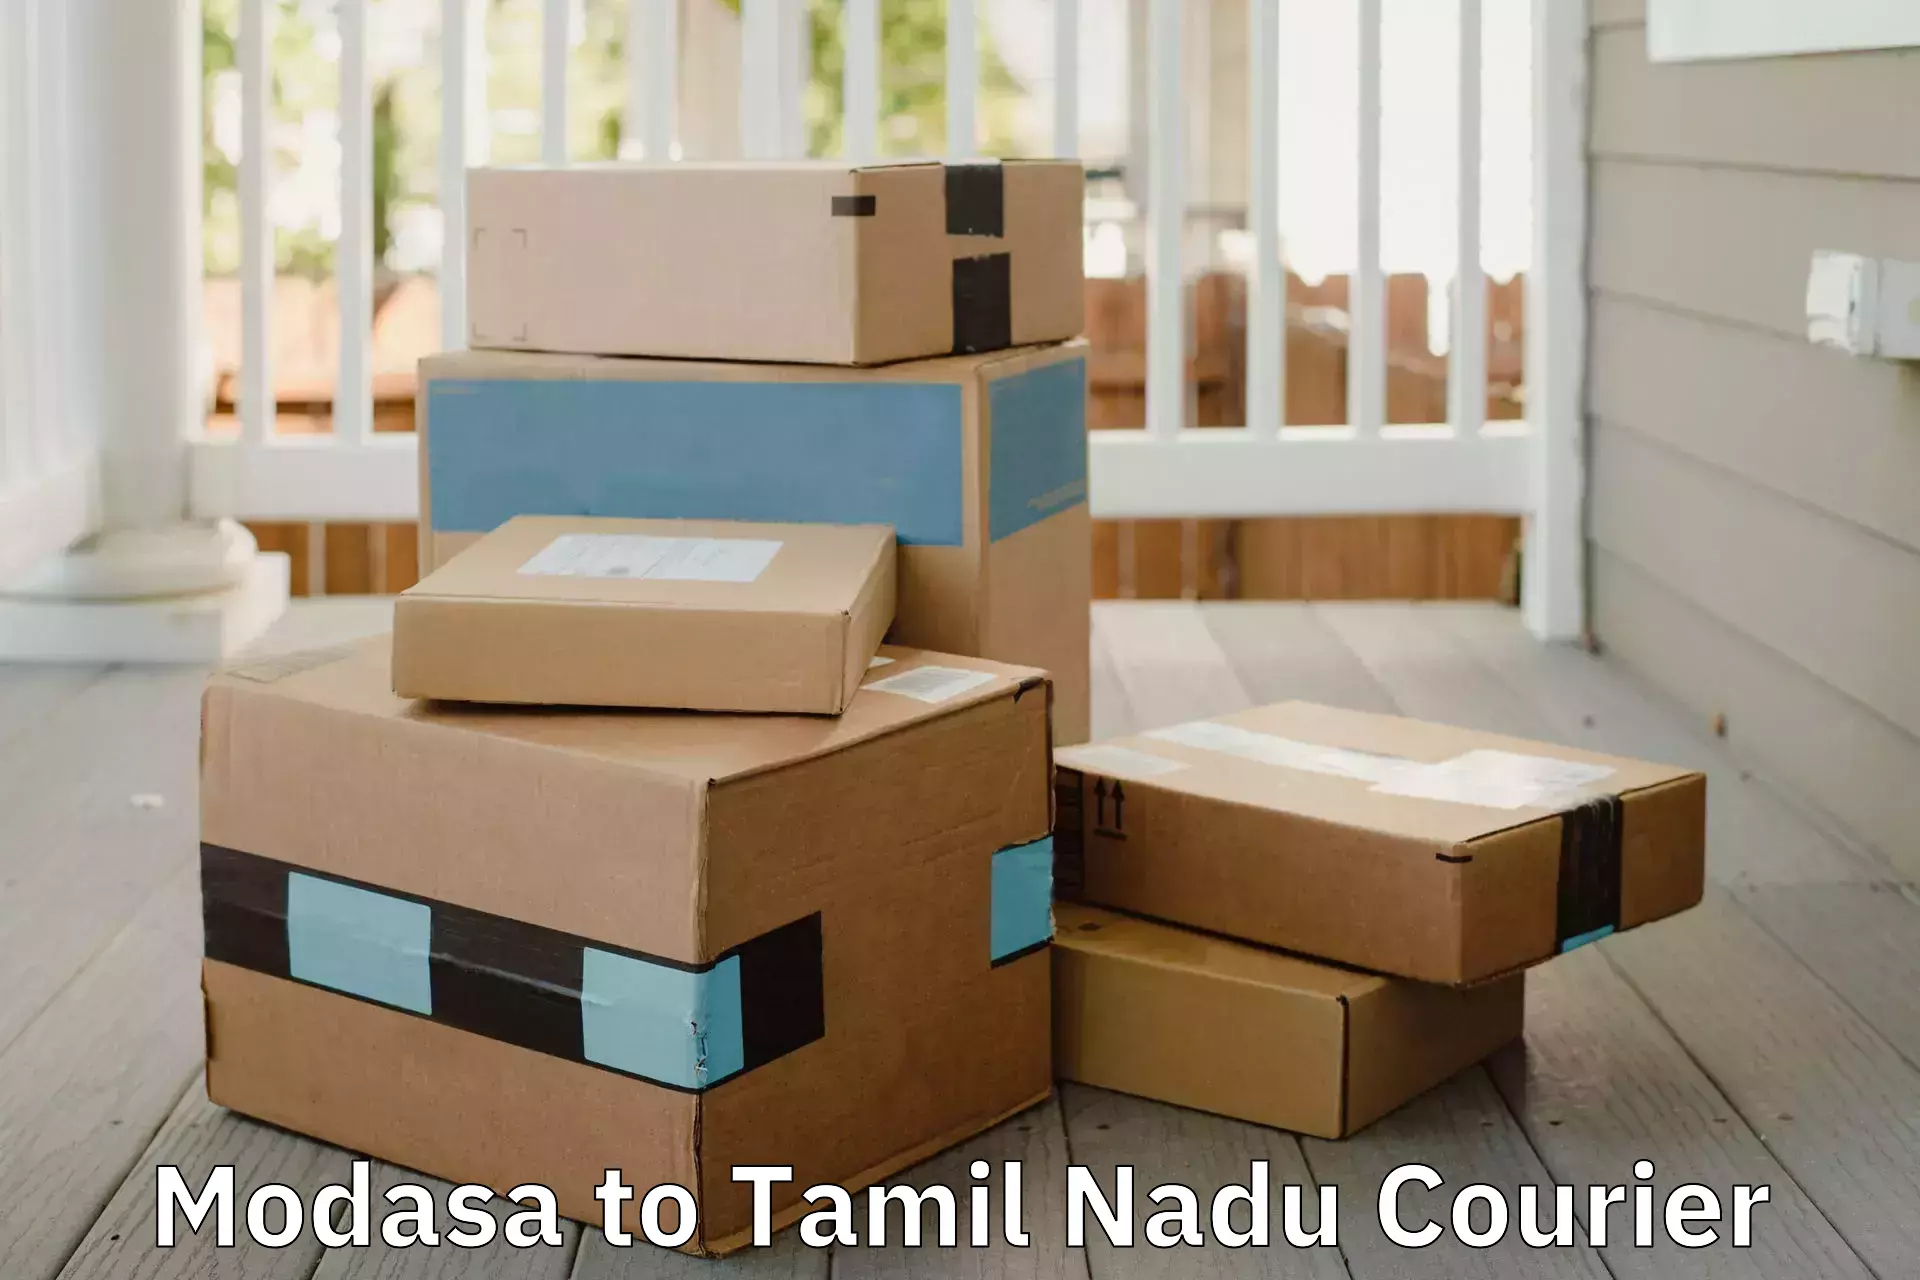 Full-service movers Modasa to Tamil Nadu